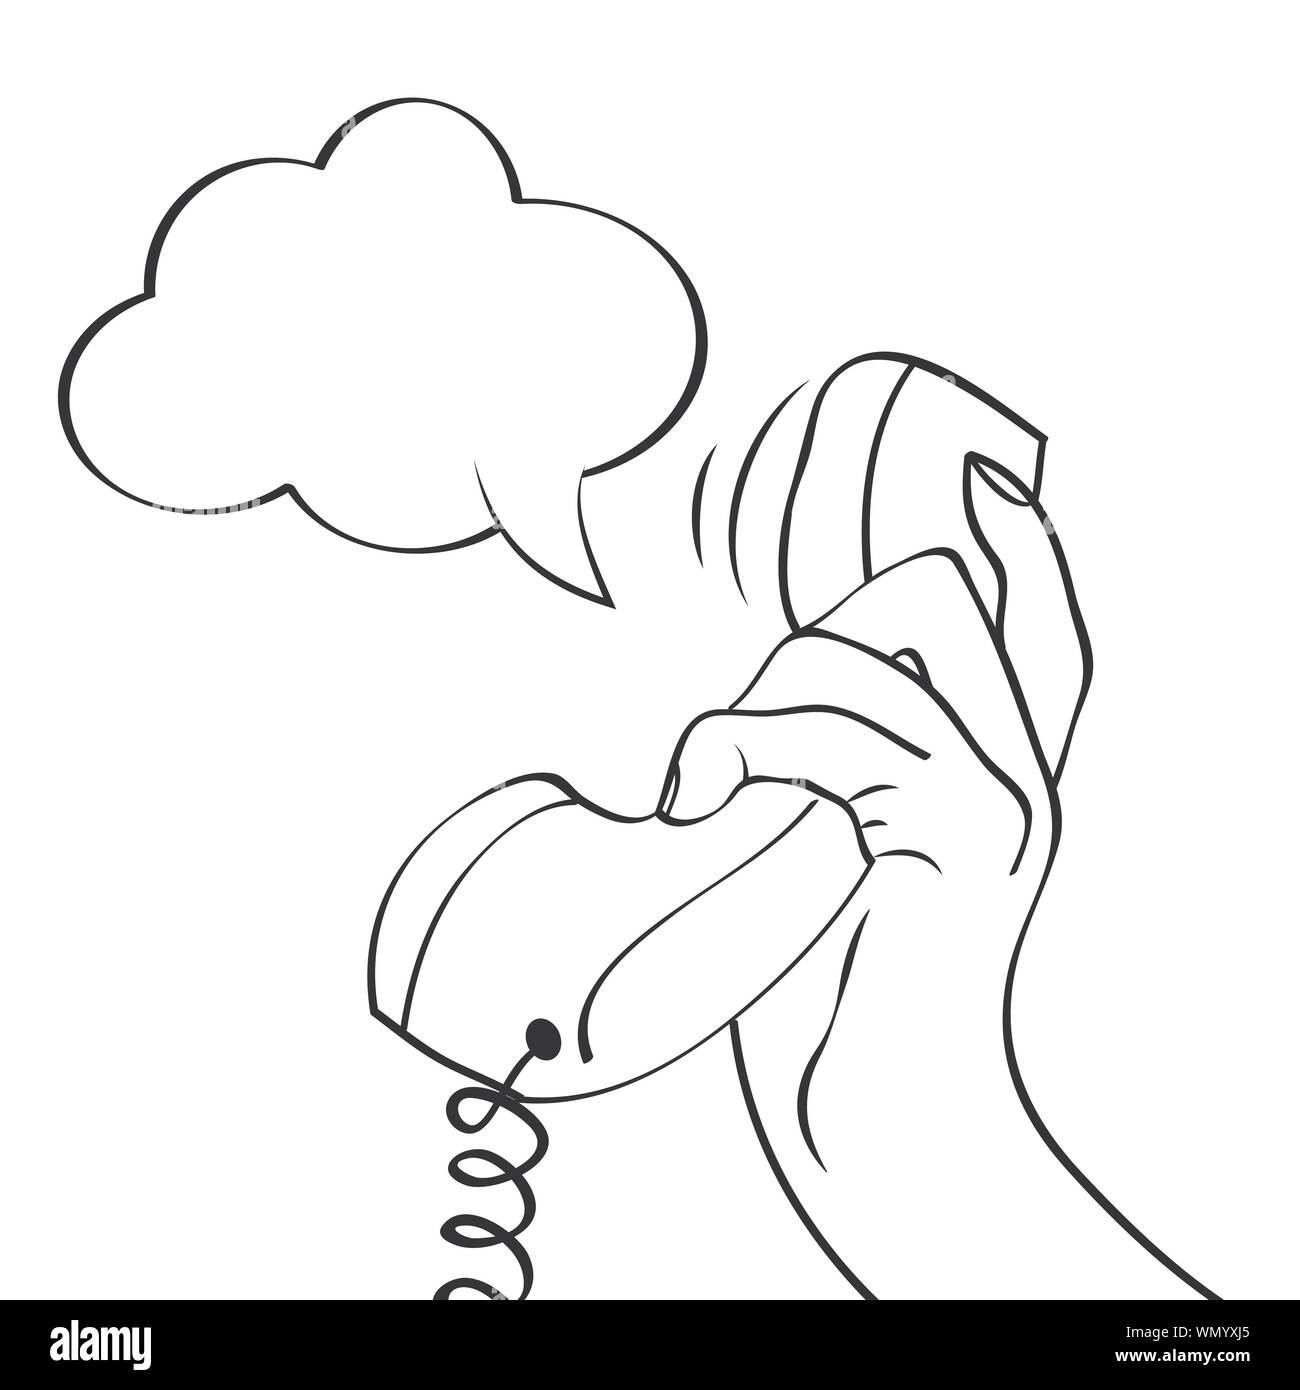 Hand holding a phone, pop art illustration Stock Vector